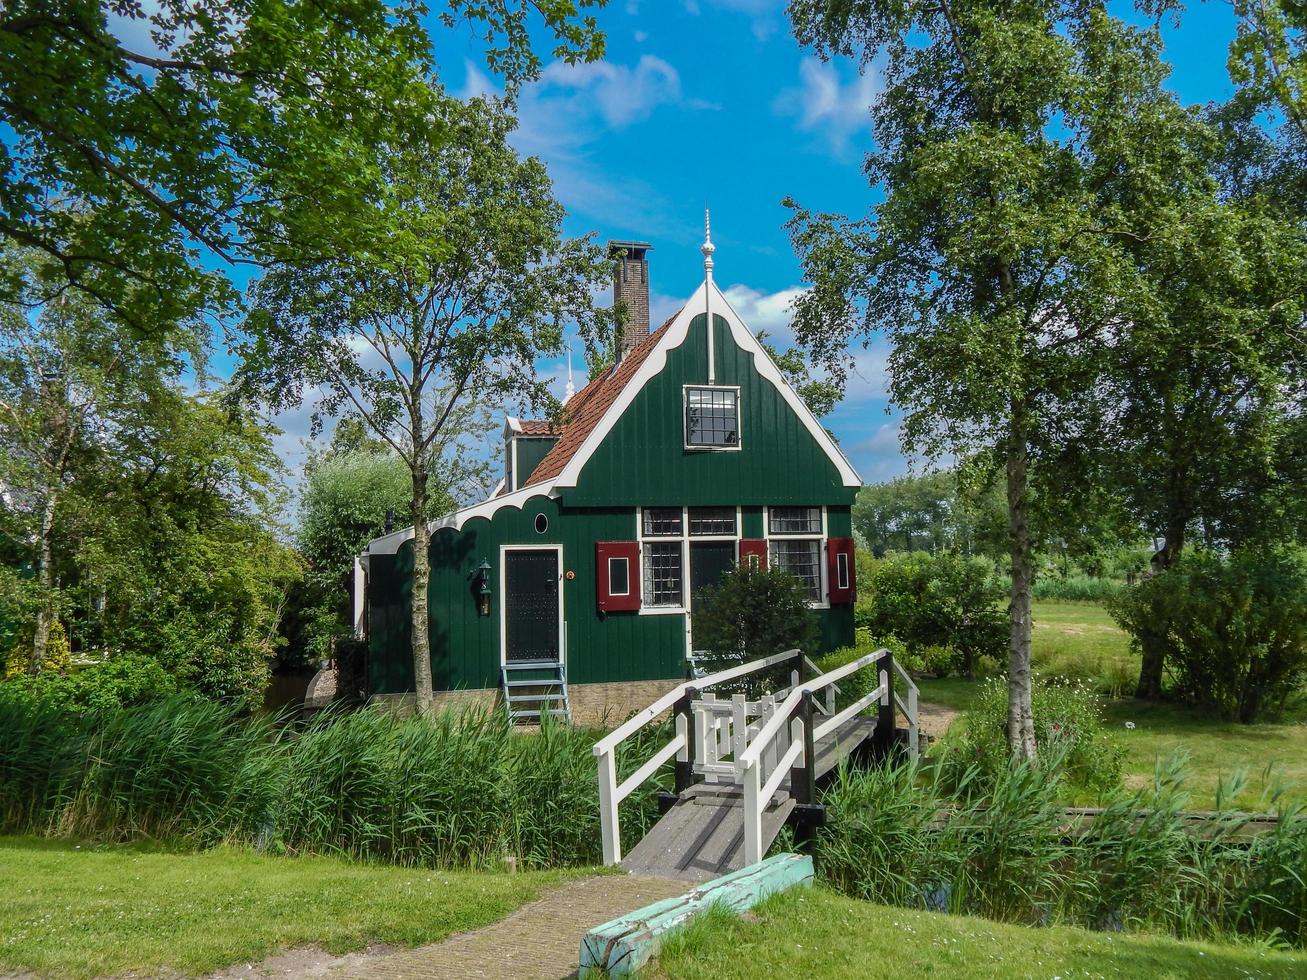 Traditional House in Zaanse Schans, Netherlands on June 19, 2016 photo